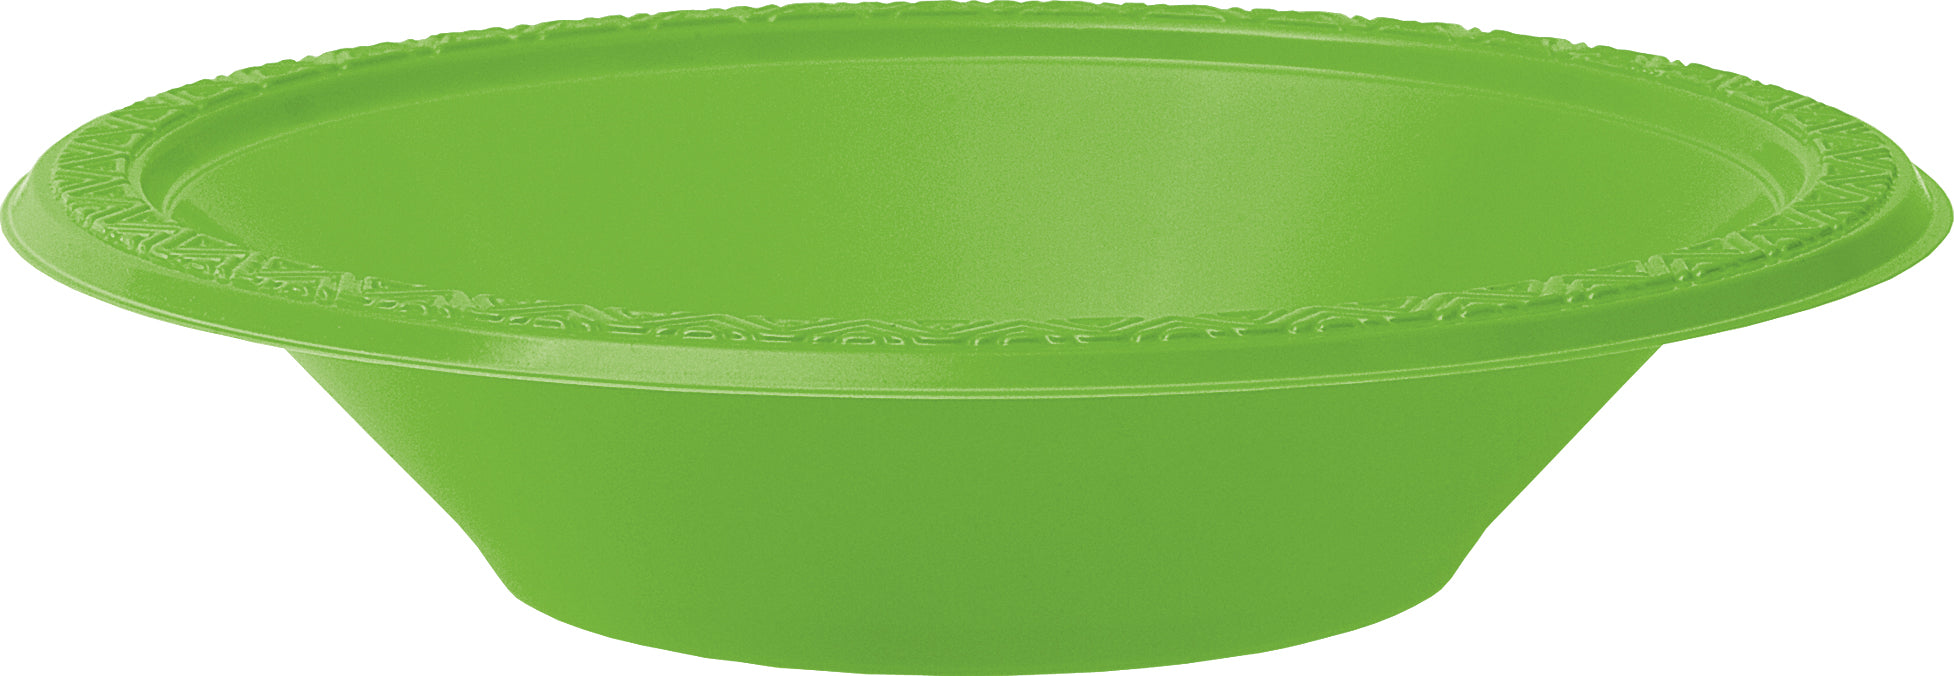 8 Pack Lime Green Plastic Bowls - 18cm